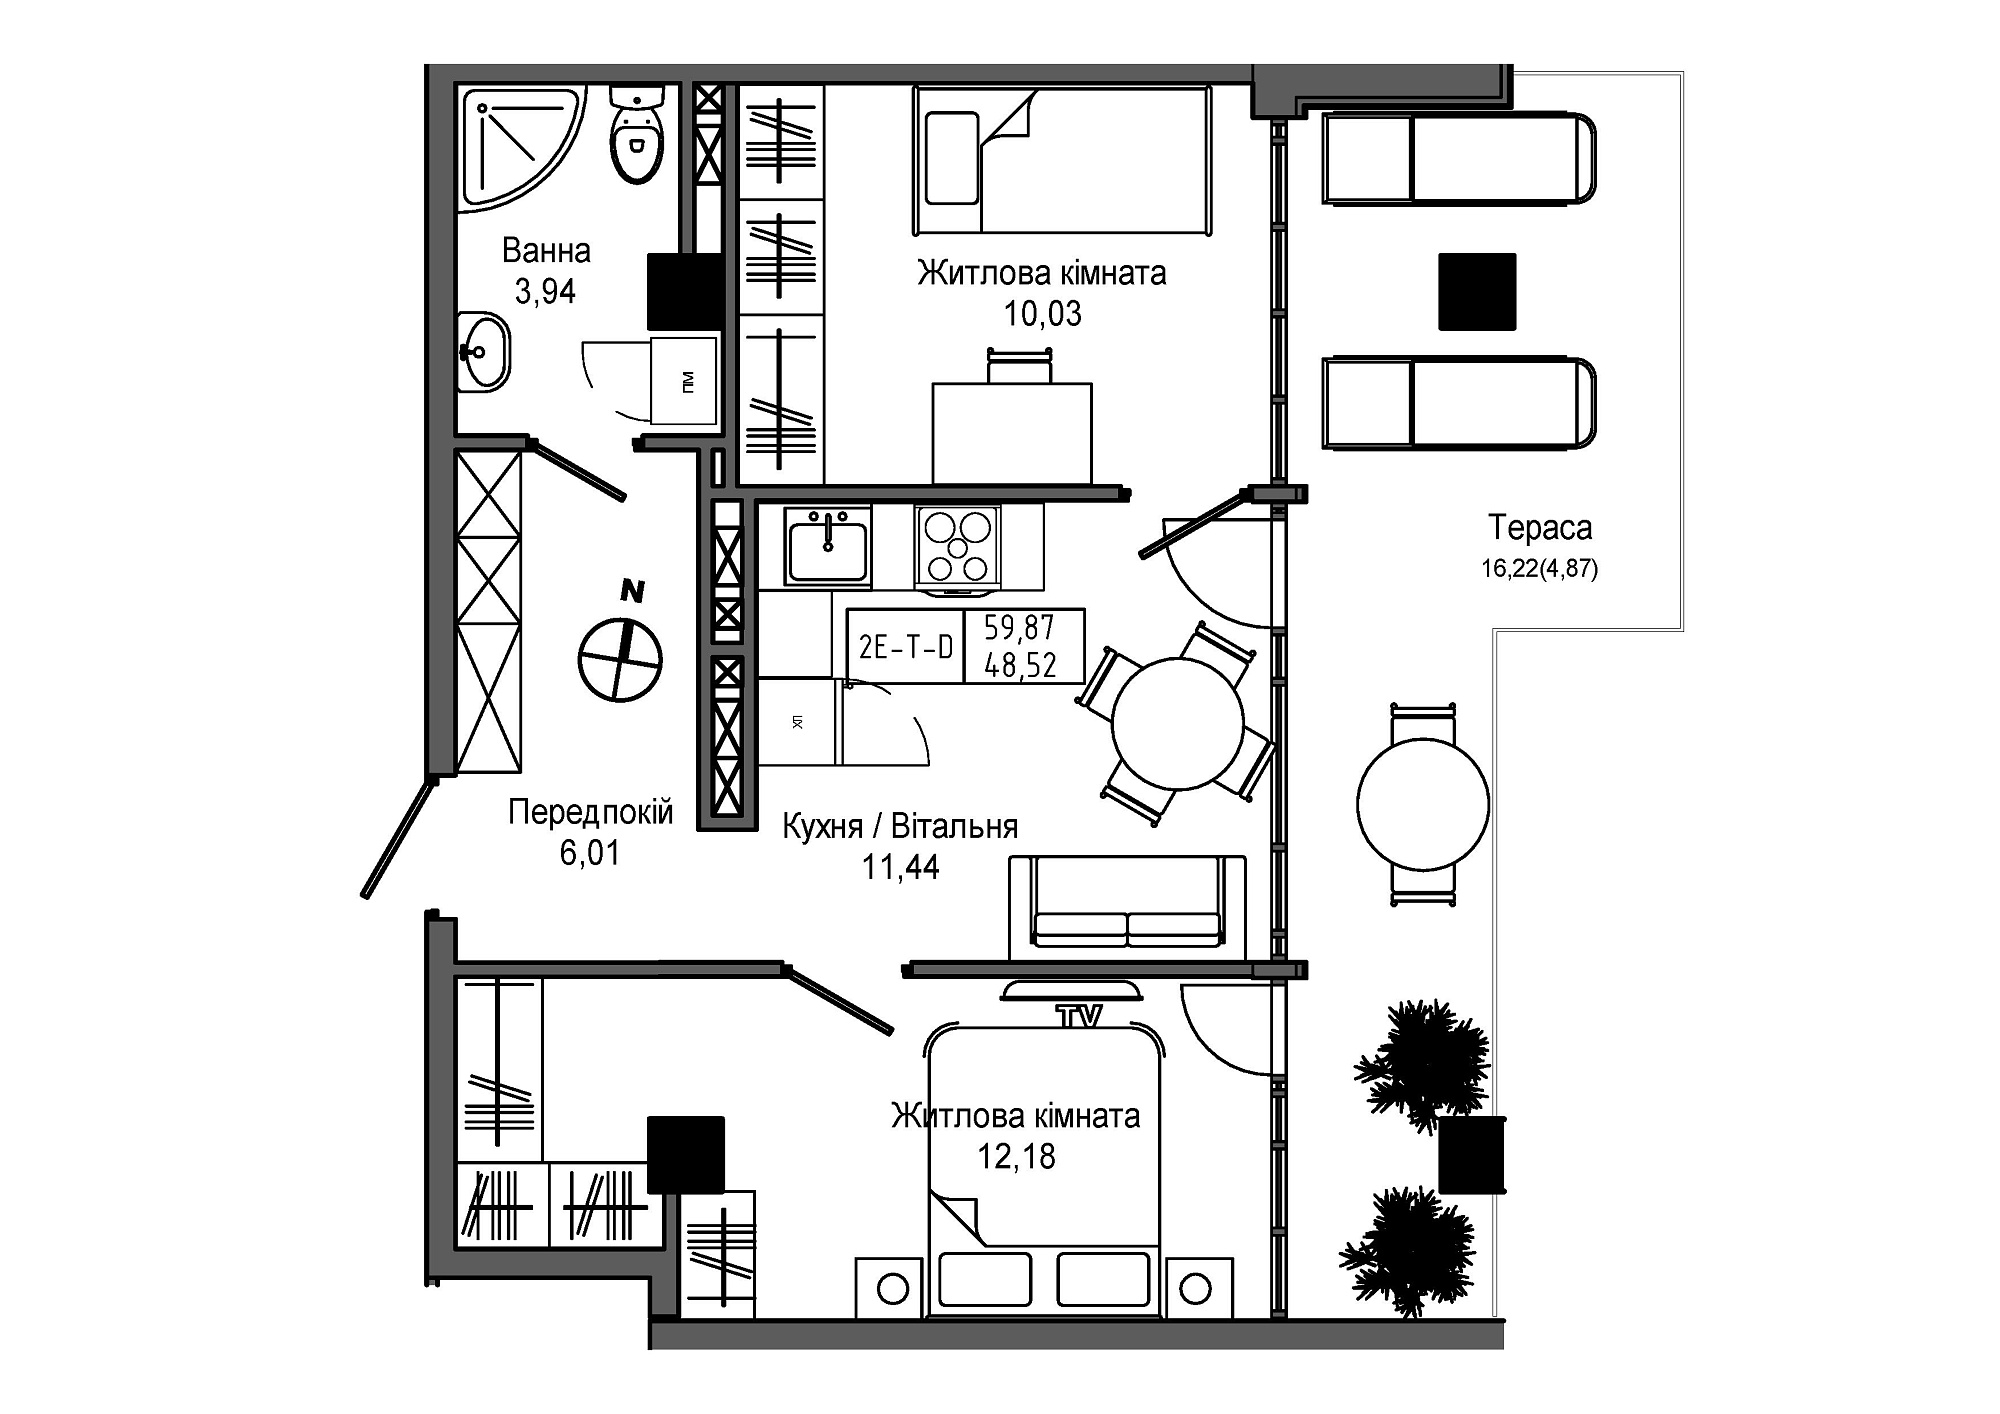 Планування 2-к квартира площею 48.52м2, UM-006-09/0023.